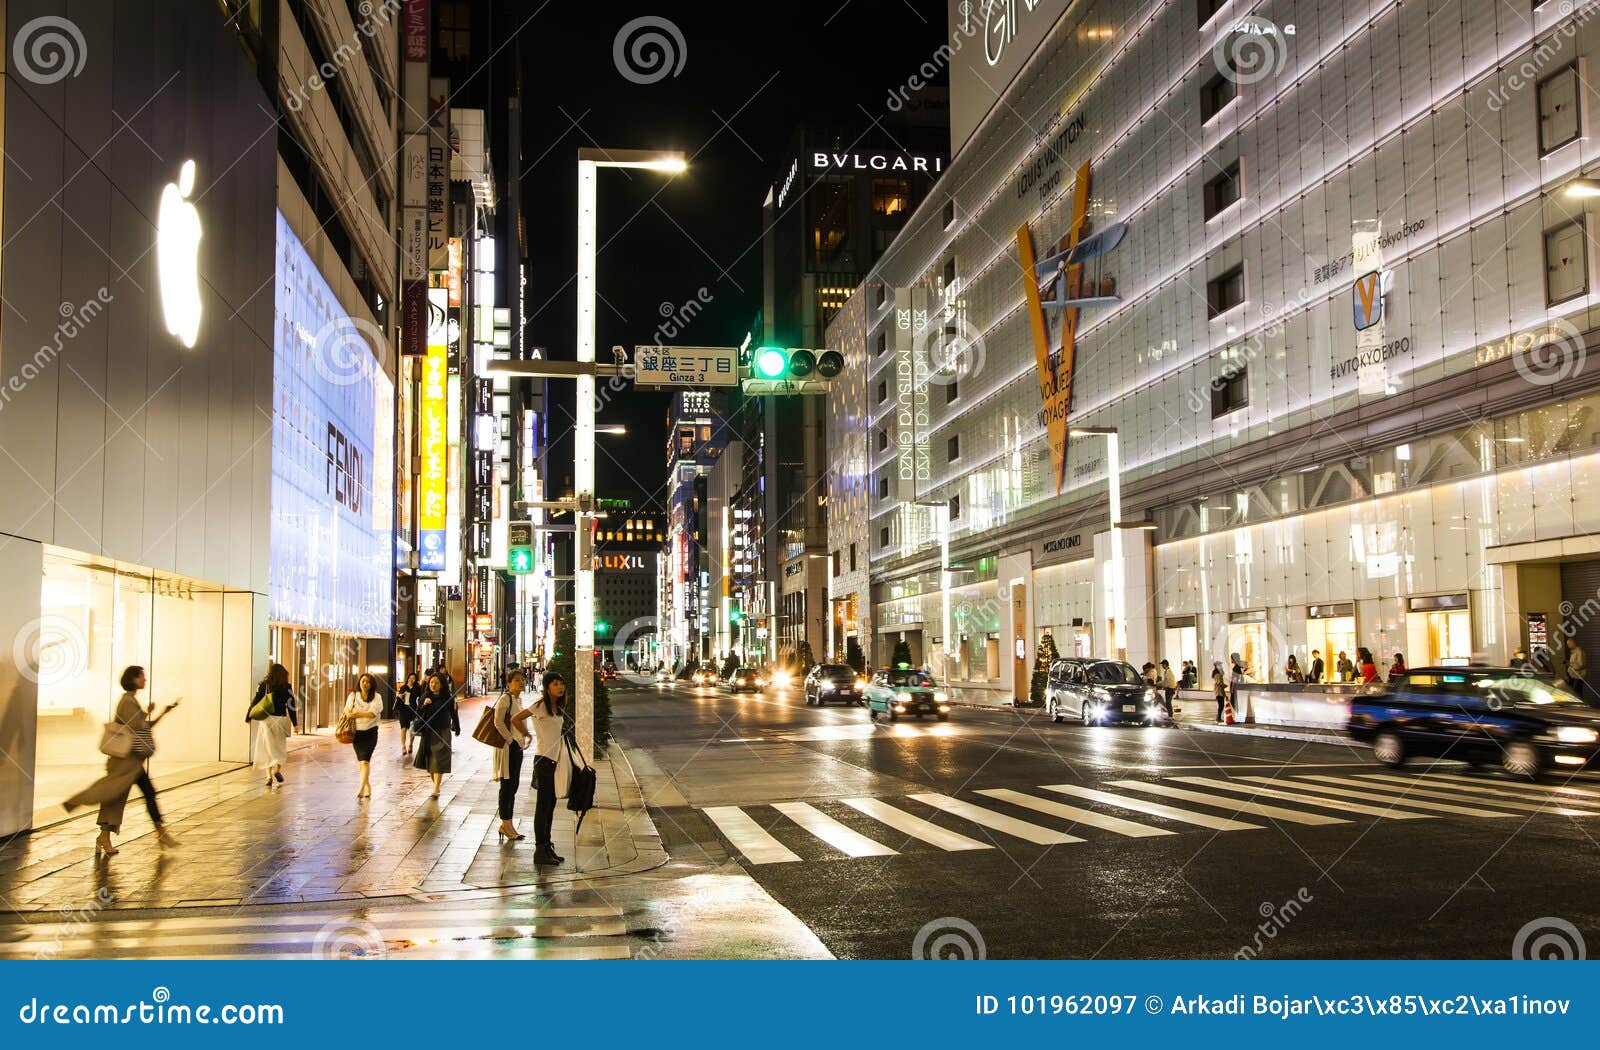 Brand Street Tokyo